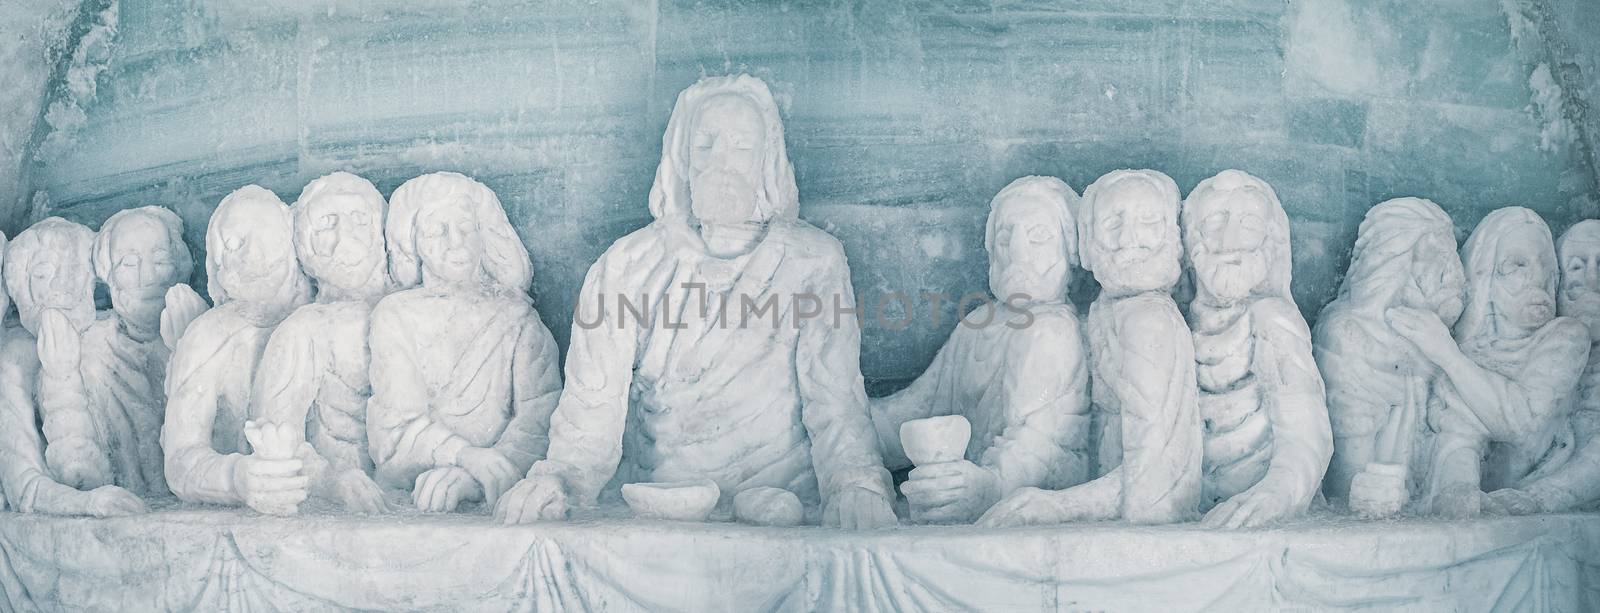 Ice Hotel - Balea Lake Romania - January 24 2019. ice sculpture represented The Last Supper inside the ice church from Ice hotel Balea lake, Romania